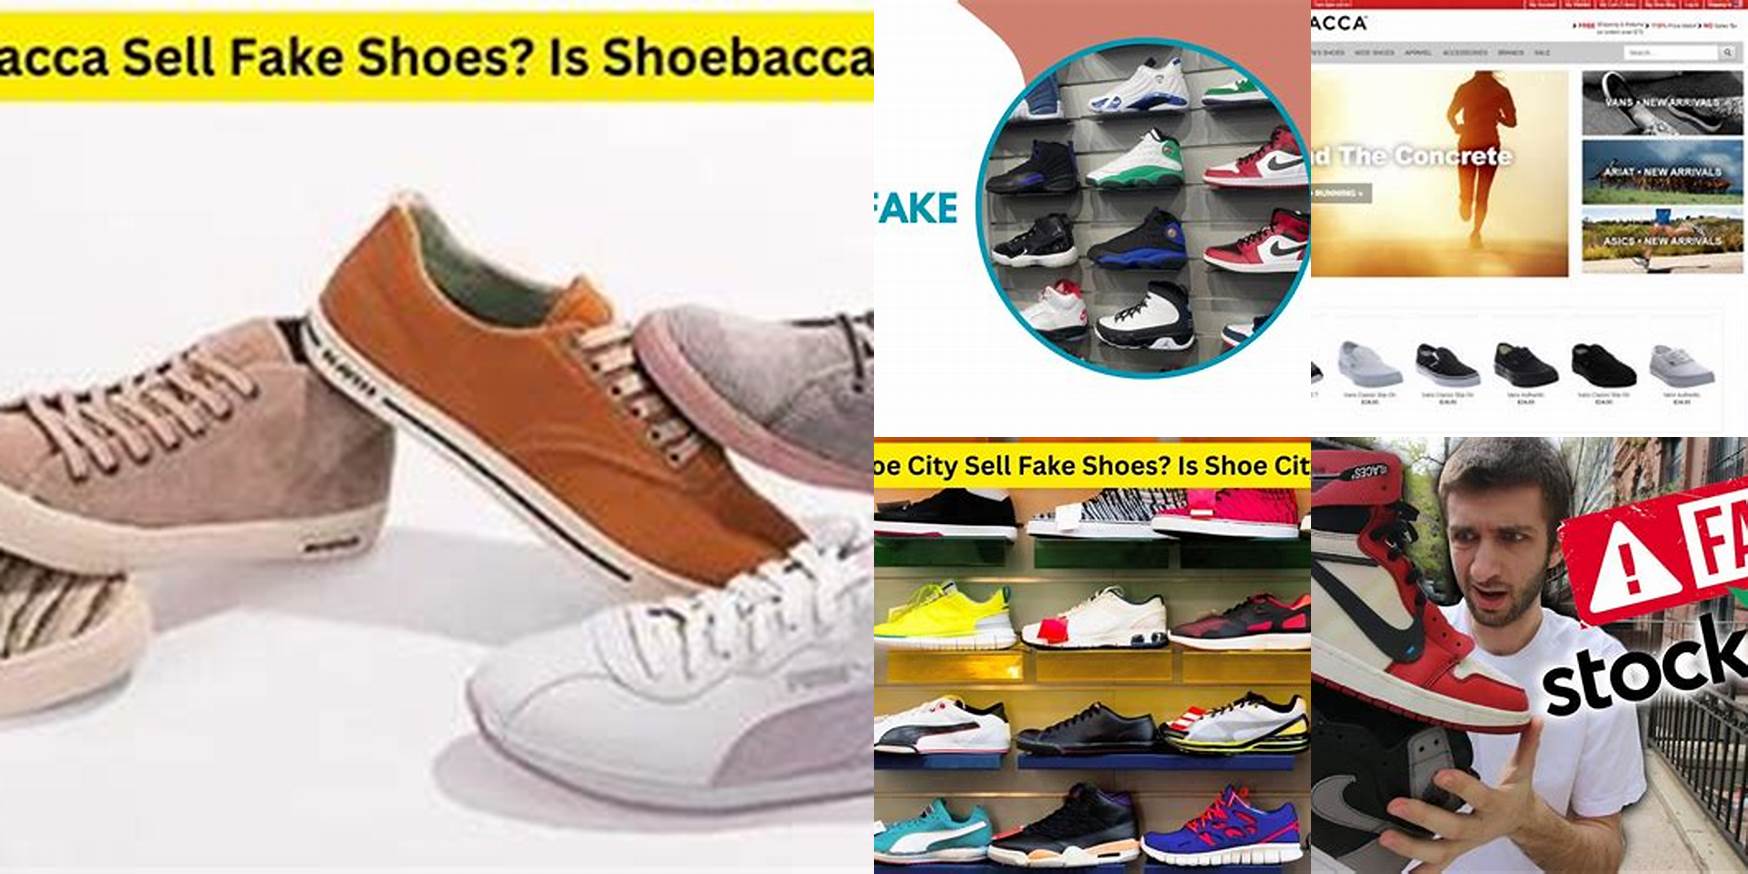 Does Shoebacca Sell Fake Shoes